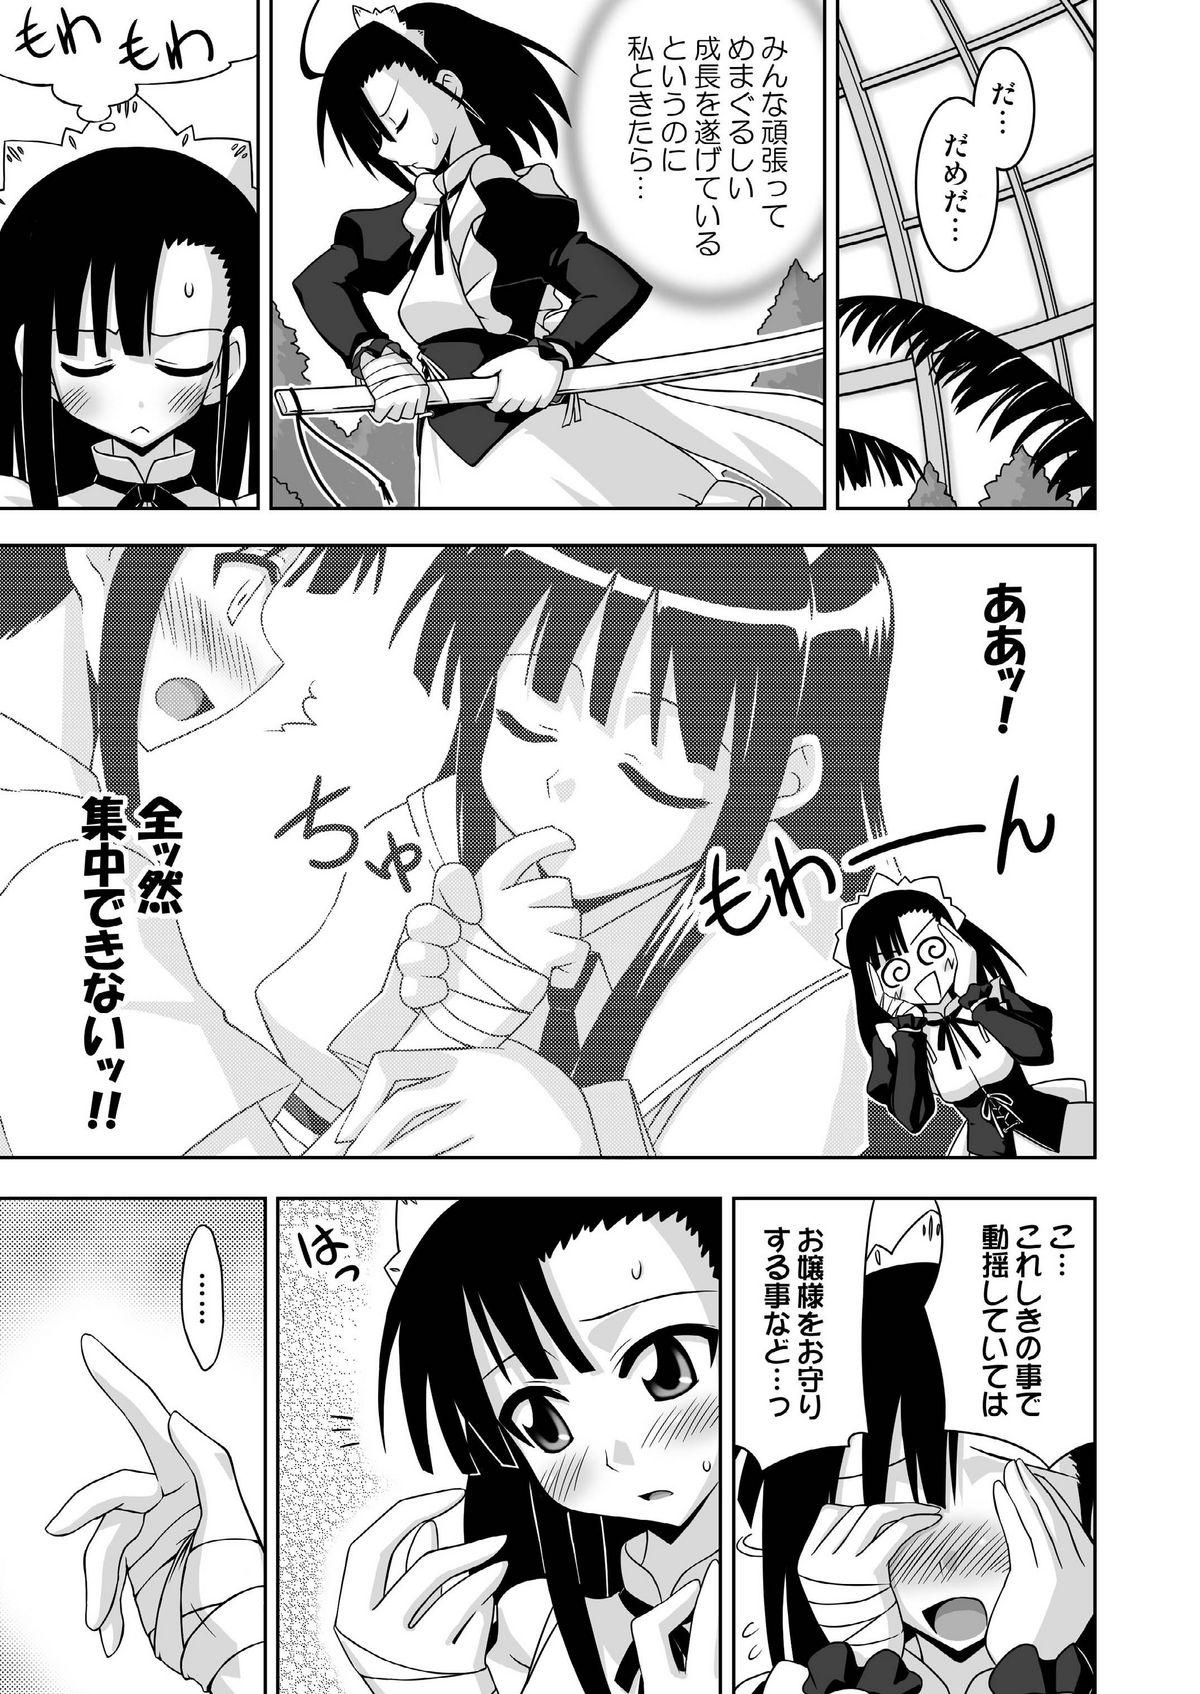 Eating Pussy Ura Mahou Sensei Jamma! 13 - Mahou sensei negima Show - Page 5